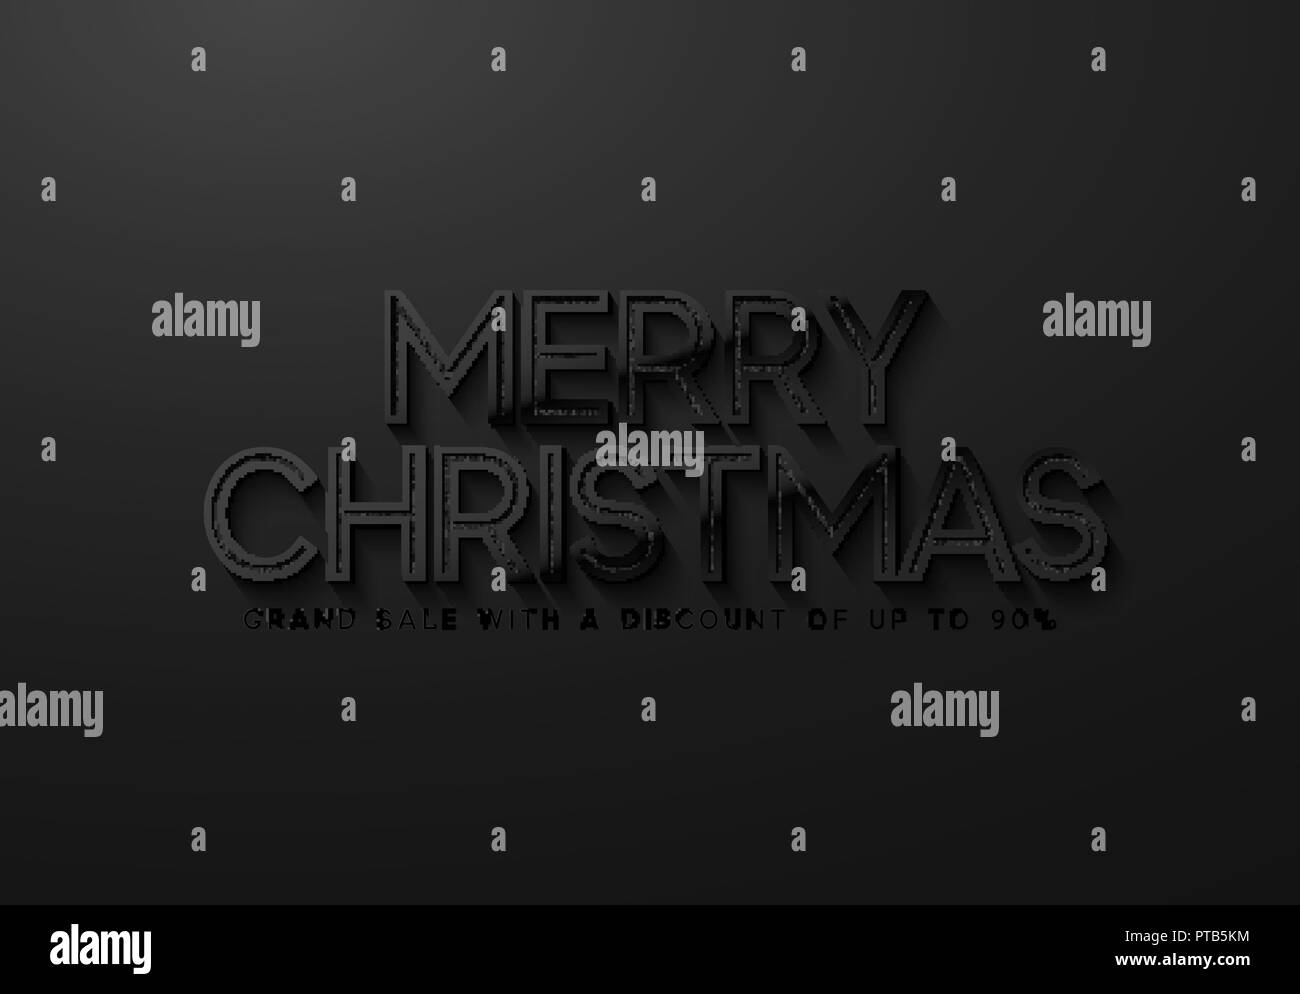 Merry Christmas on dark background black letter text Stock Vector